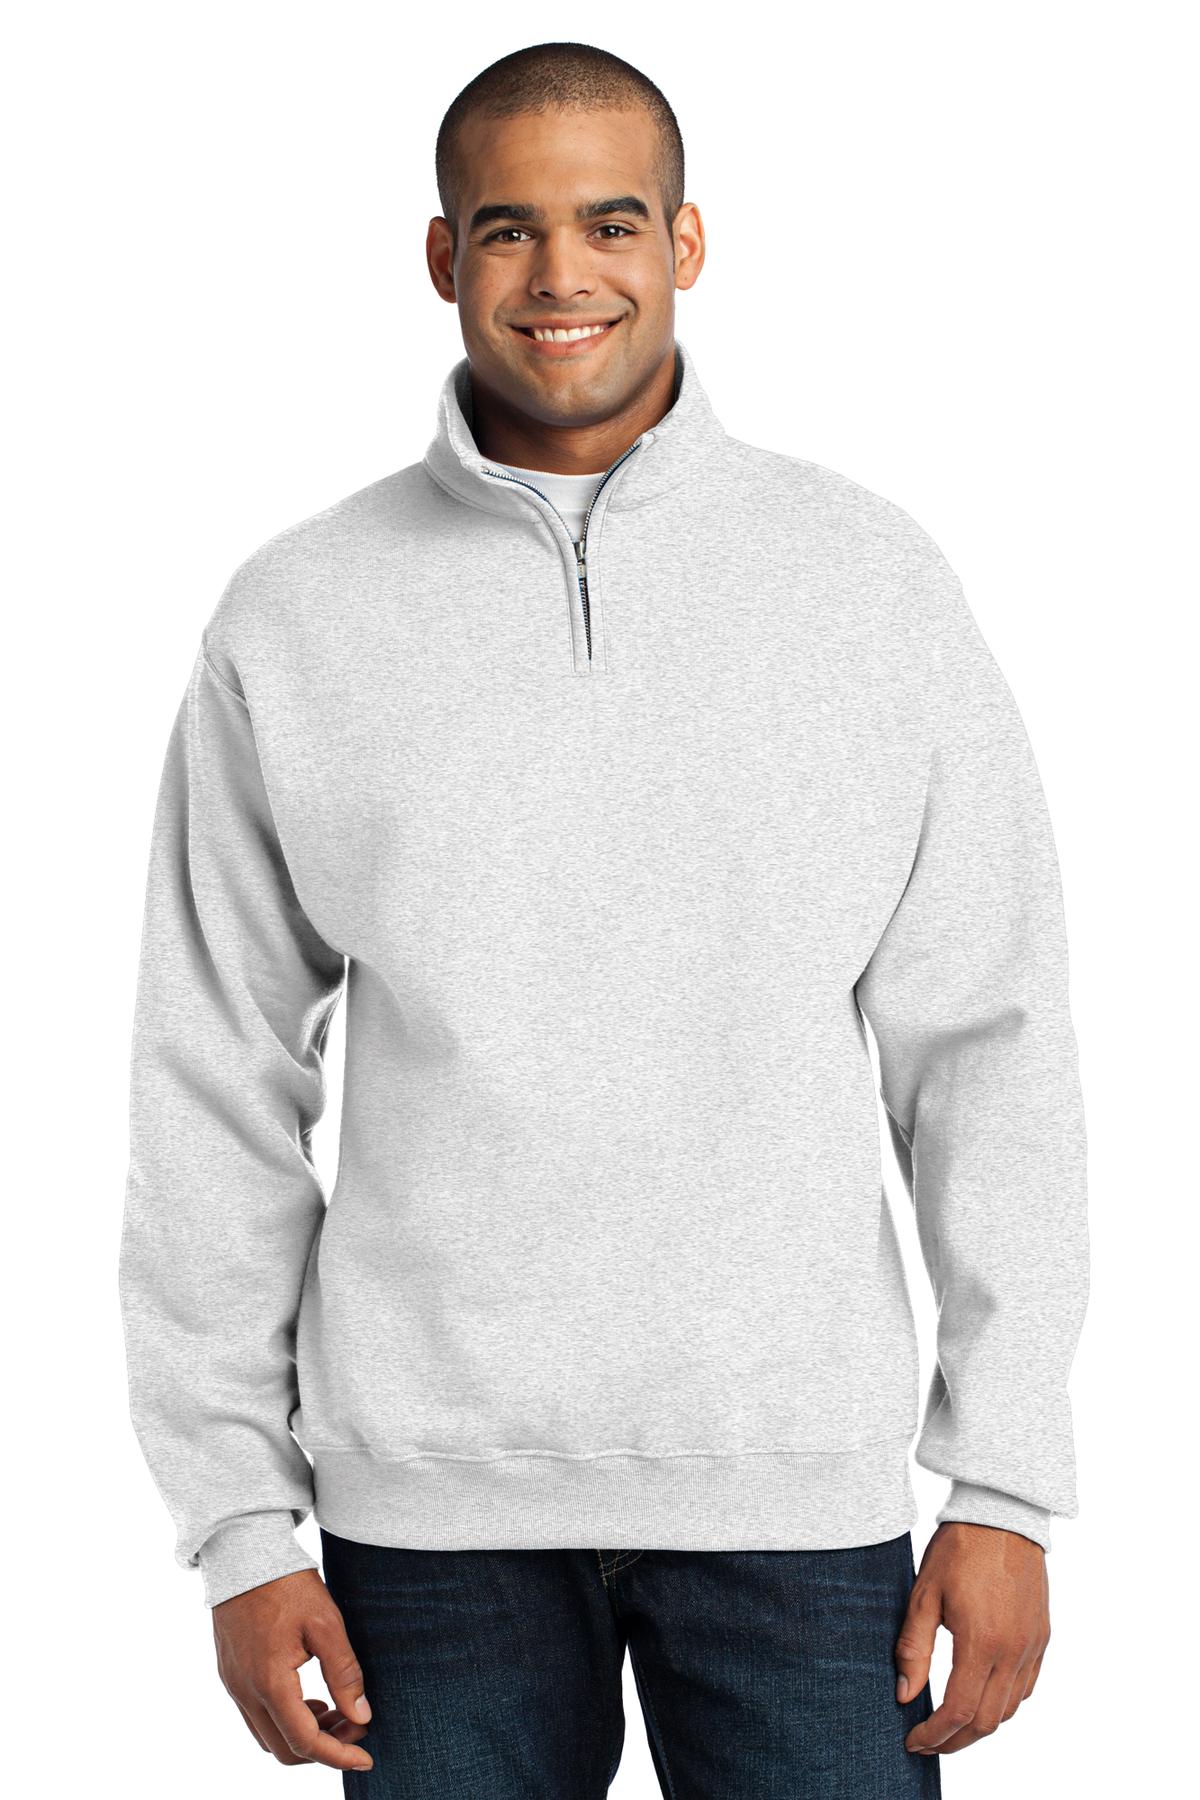 ® JERZEES - Collar Custom - 1/4-Zip ® Sweatshirt. NuBlend Shirt 995M Cadet Shop